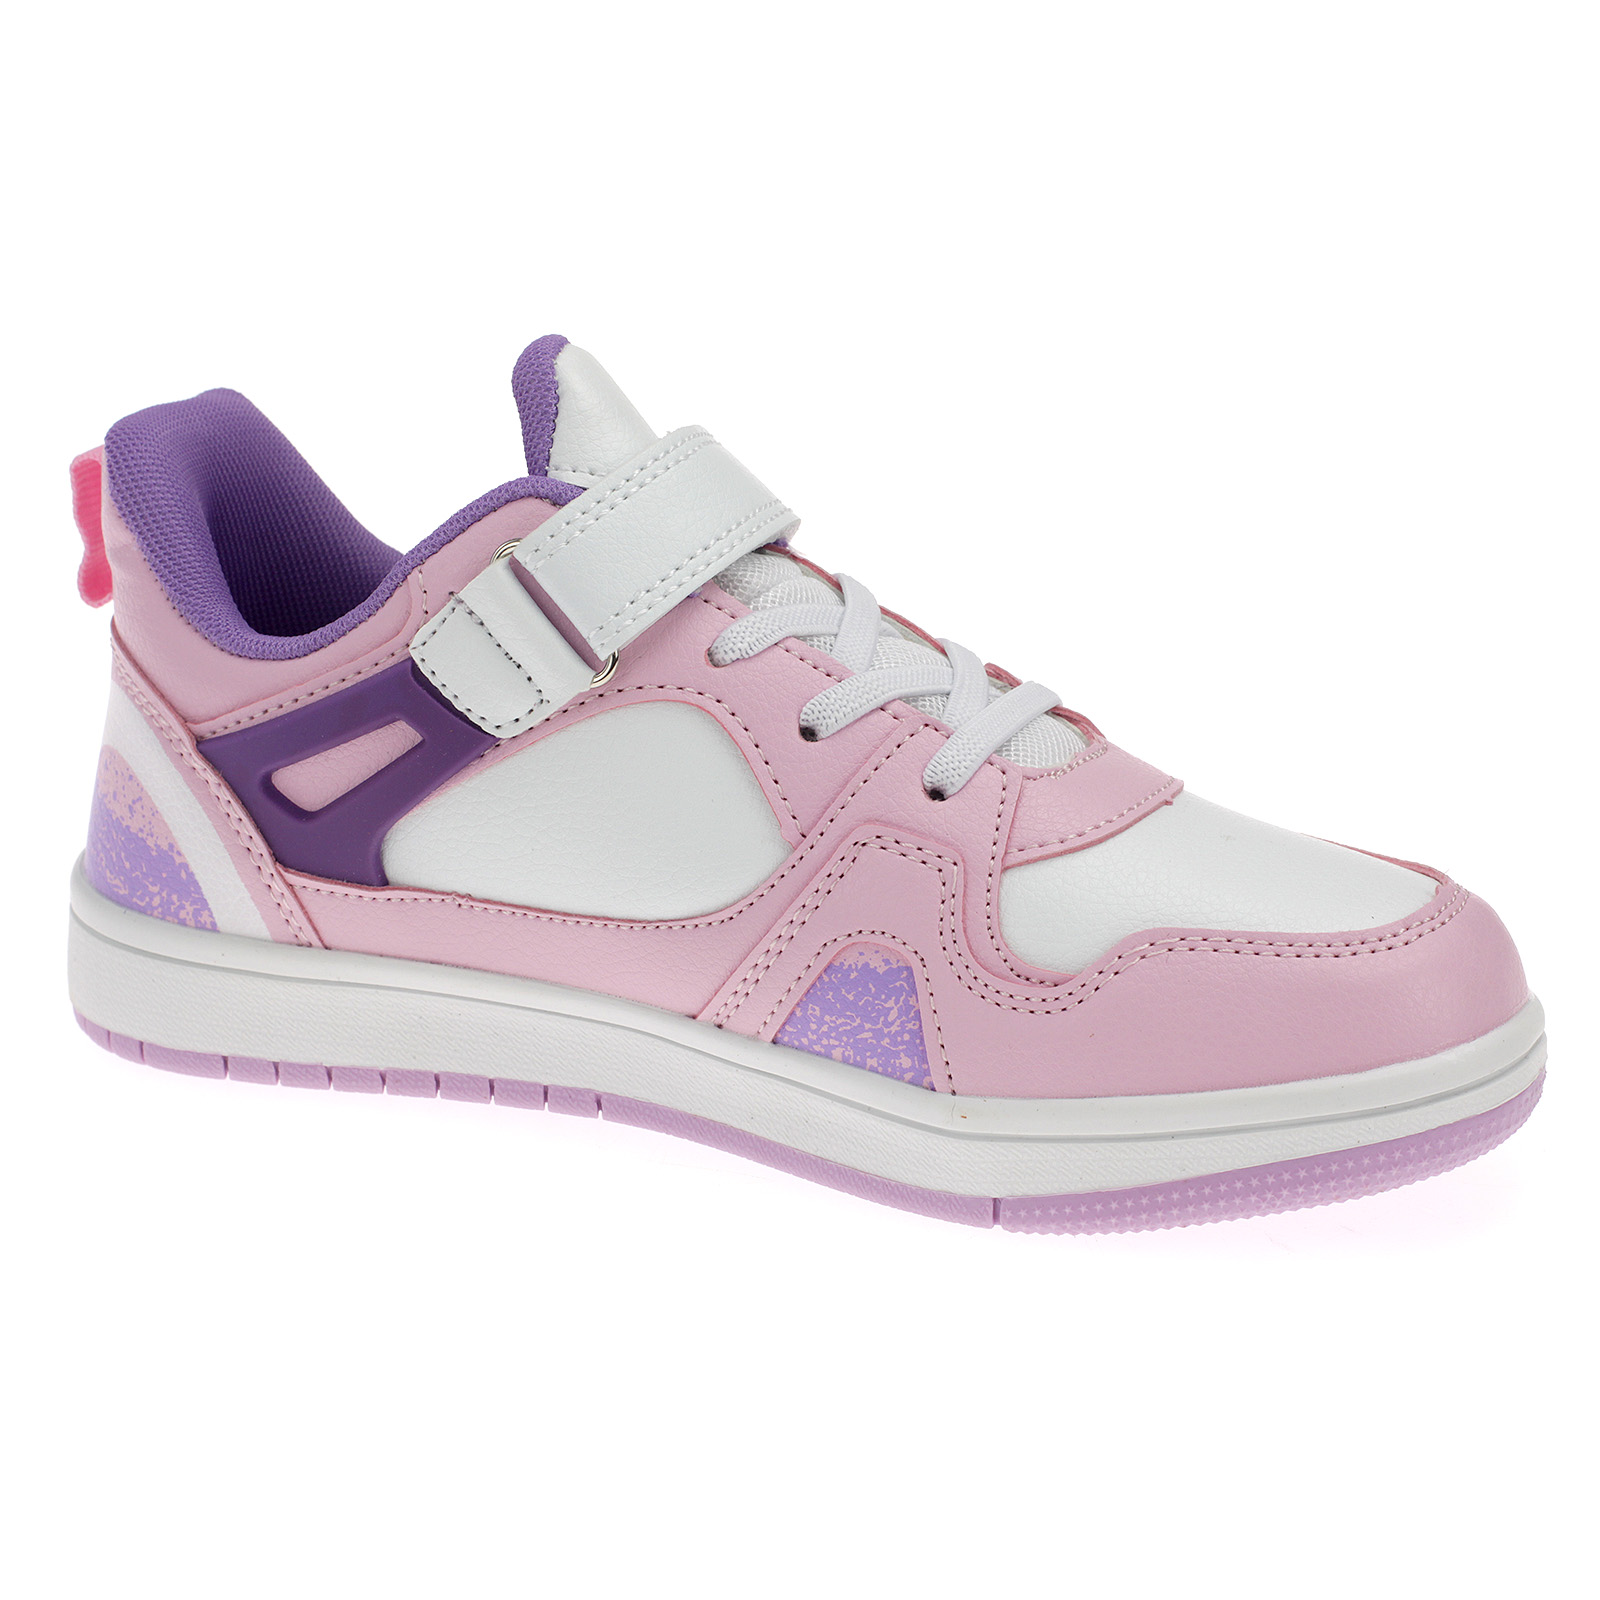 Kinder Sportschuhe Sneaker Weiß Pink Lila 2253